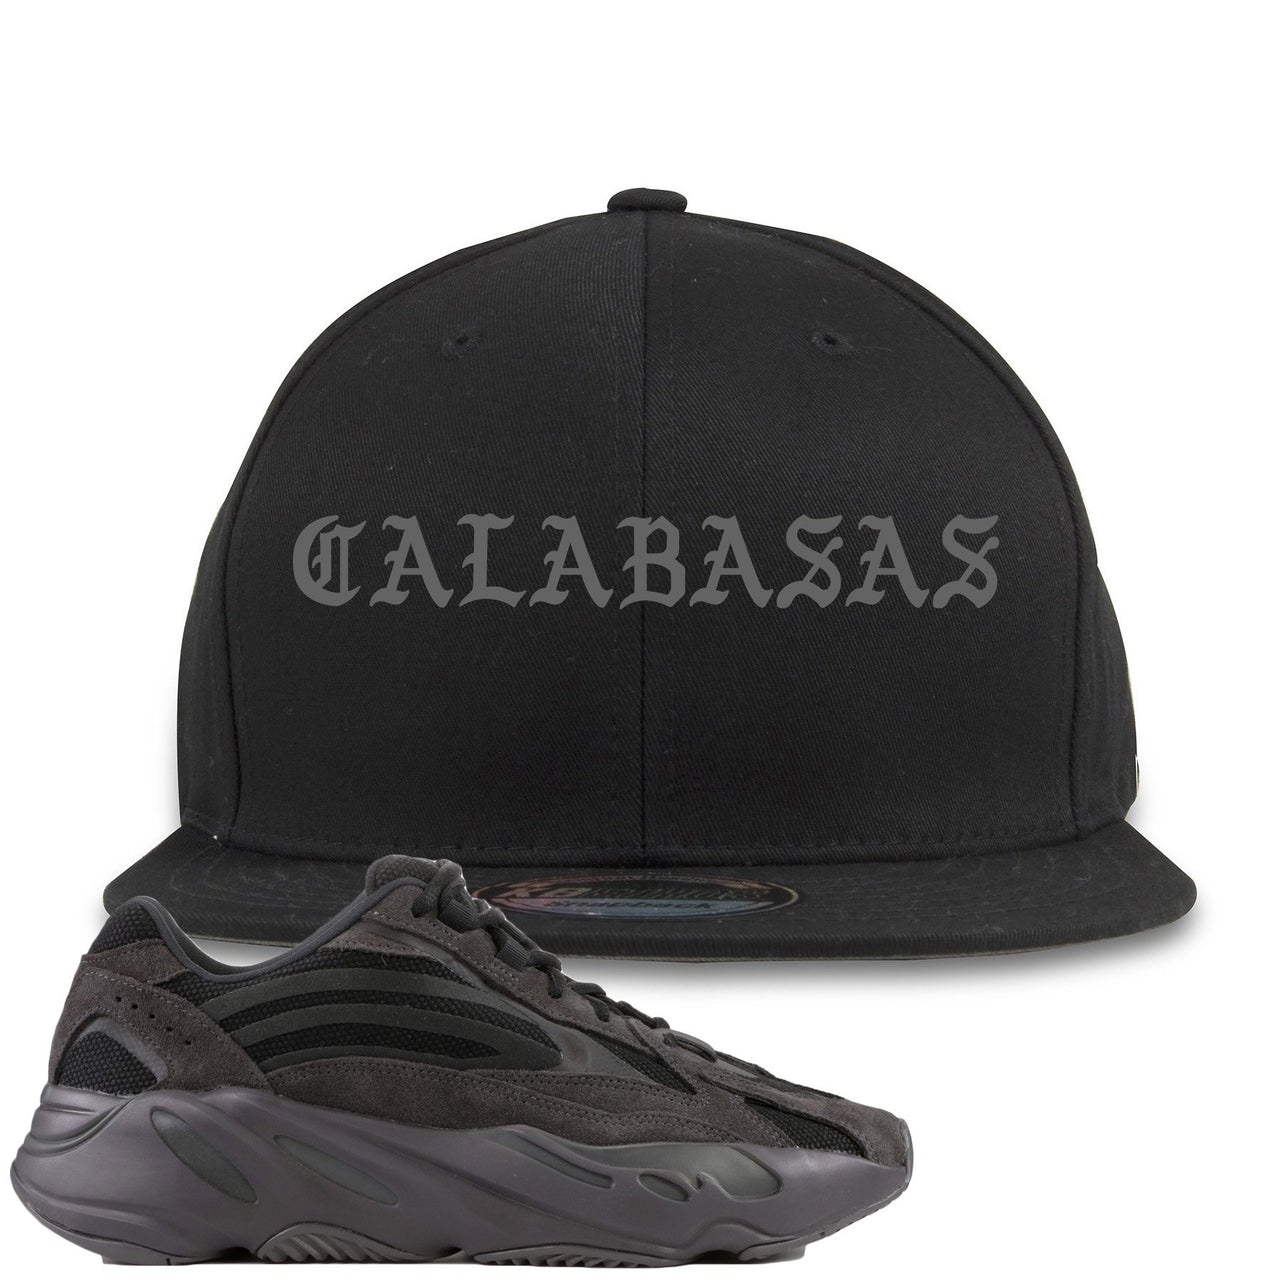 Vanta v2 700s Snapback | Calabasas, Black